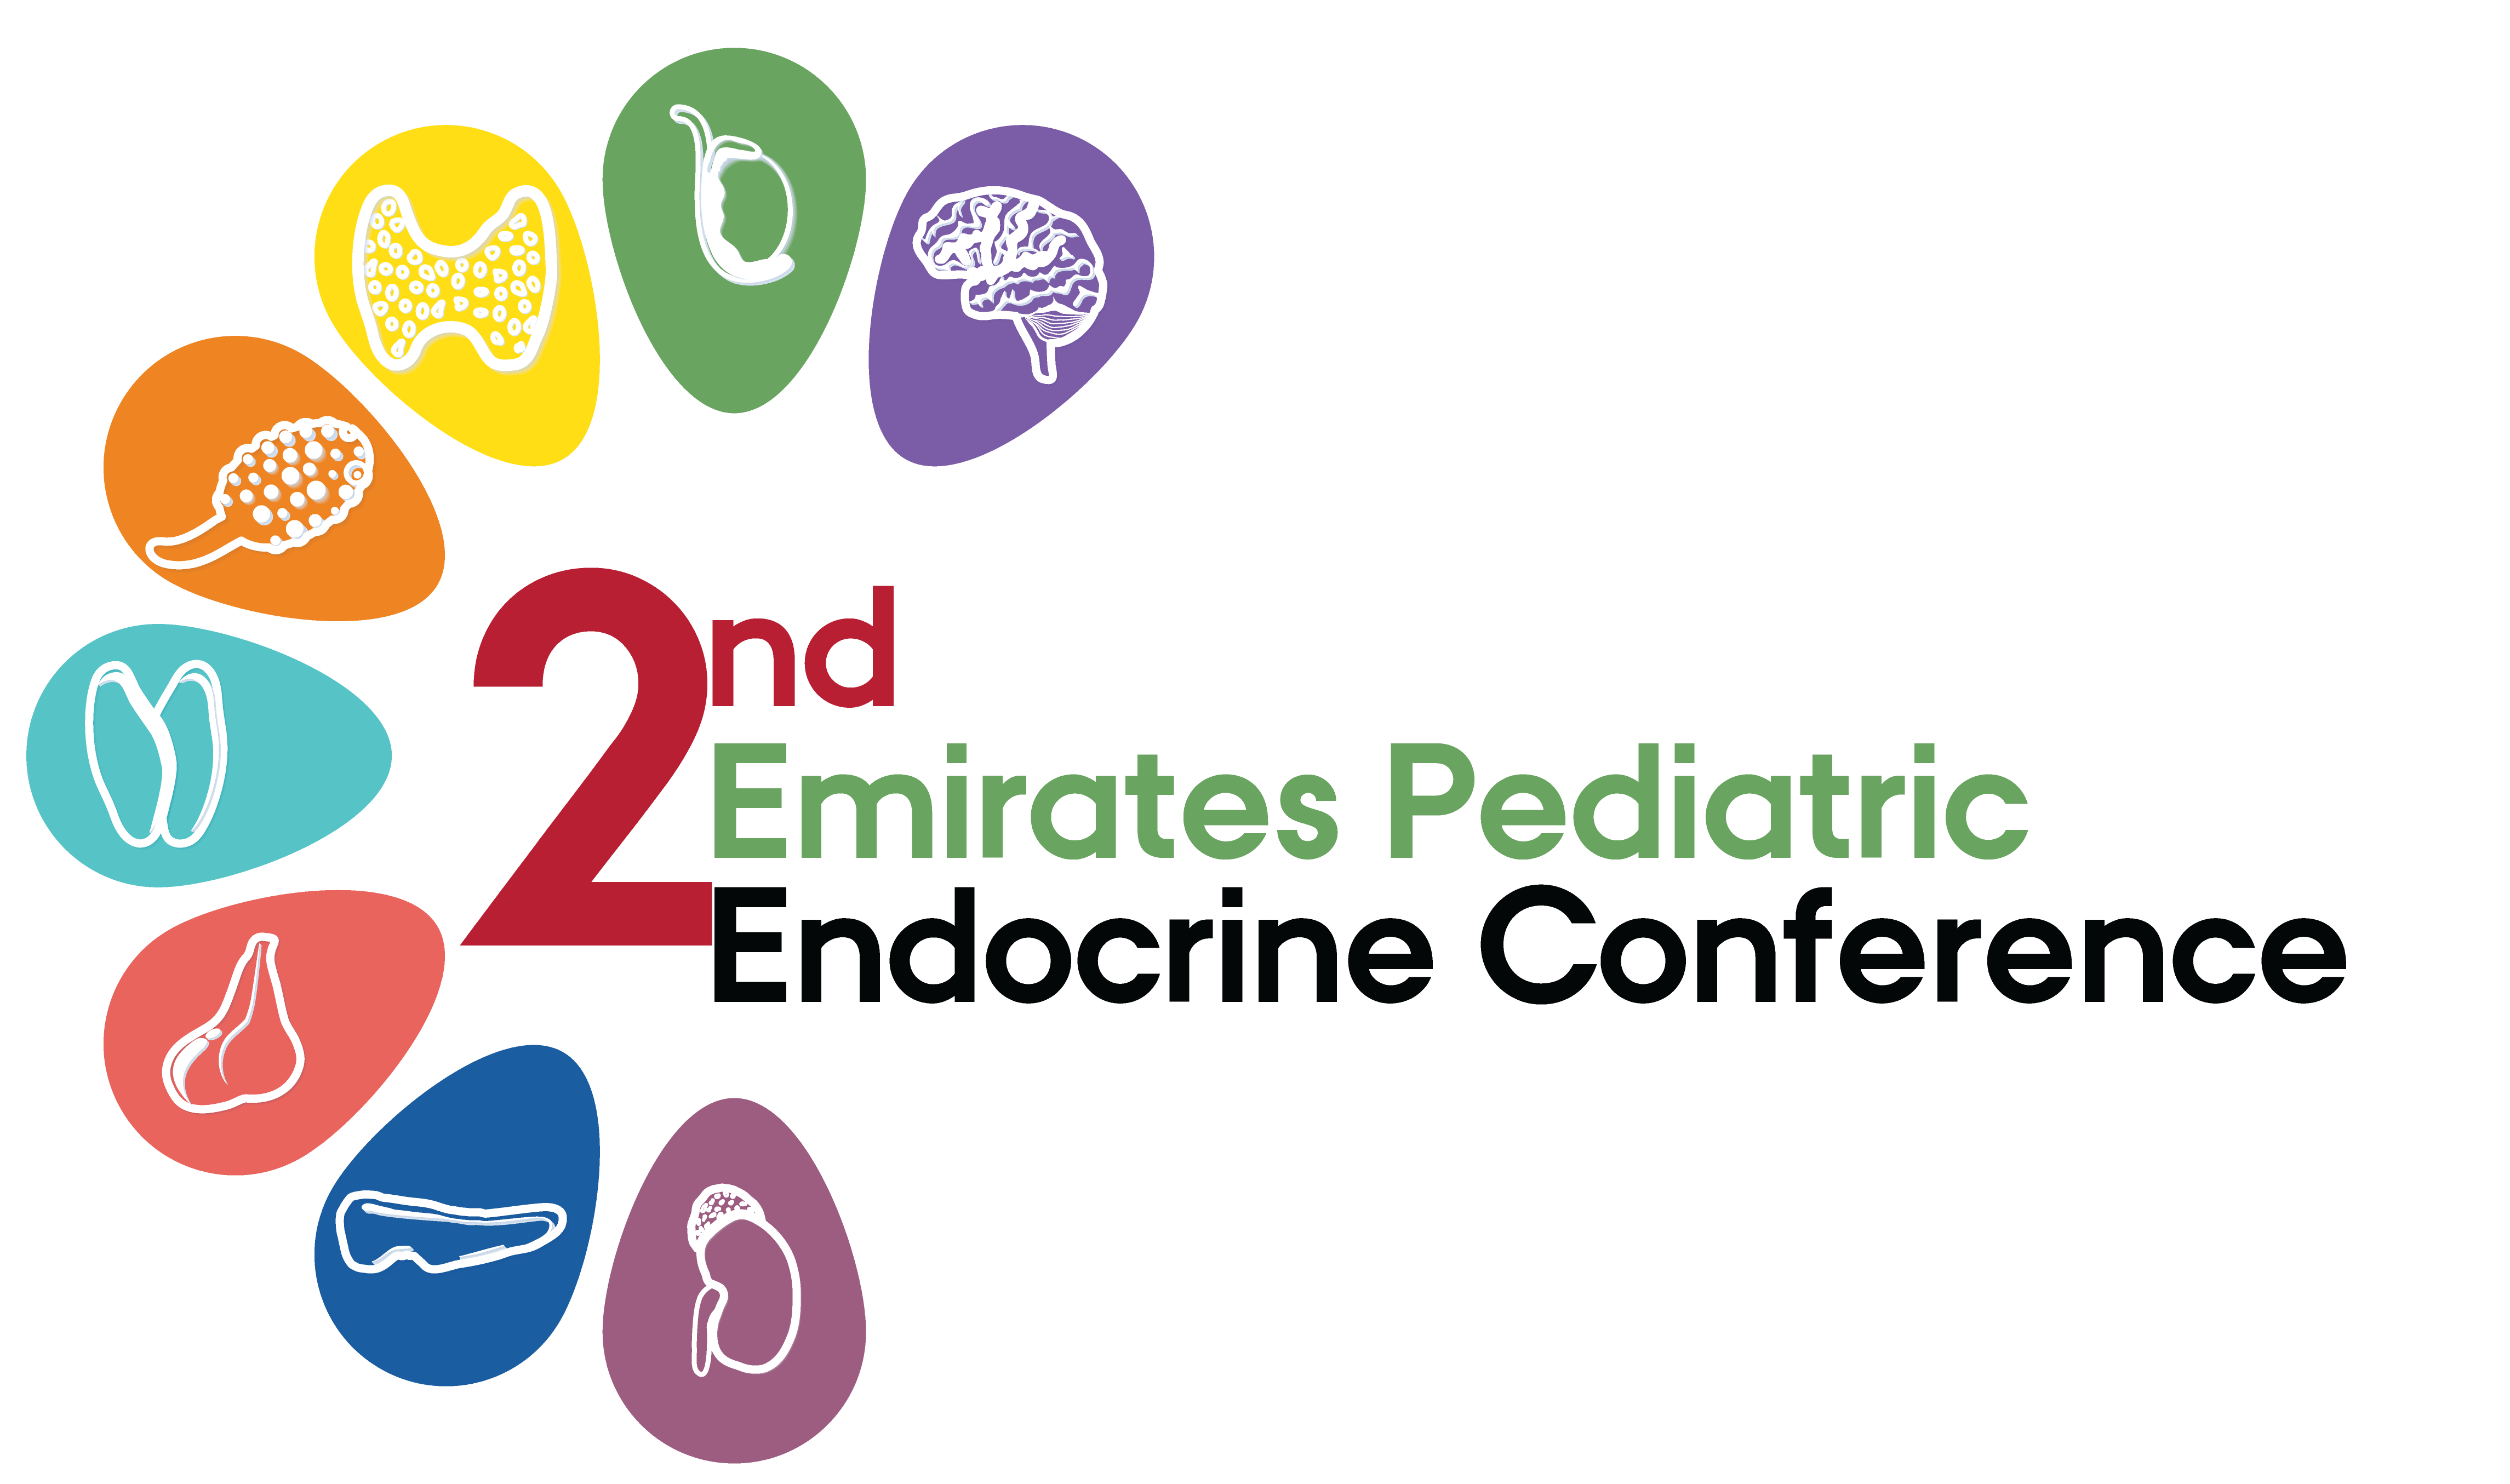 Endocrinology Logo - 2nd Emirates Pediatric Endocrine Congress | PROGRAM OVERVIEW